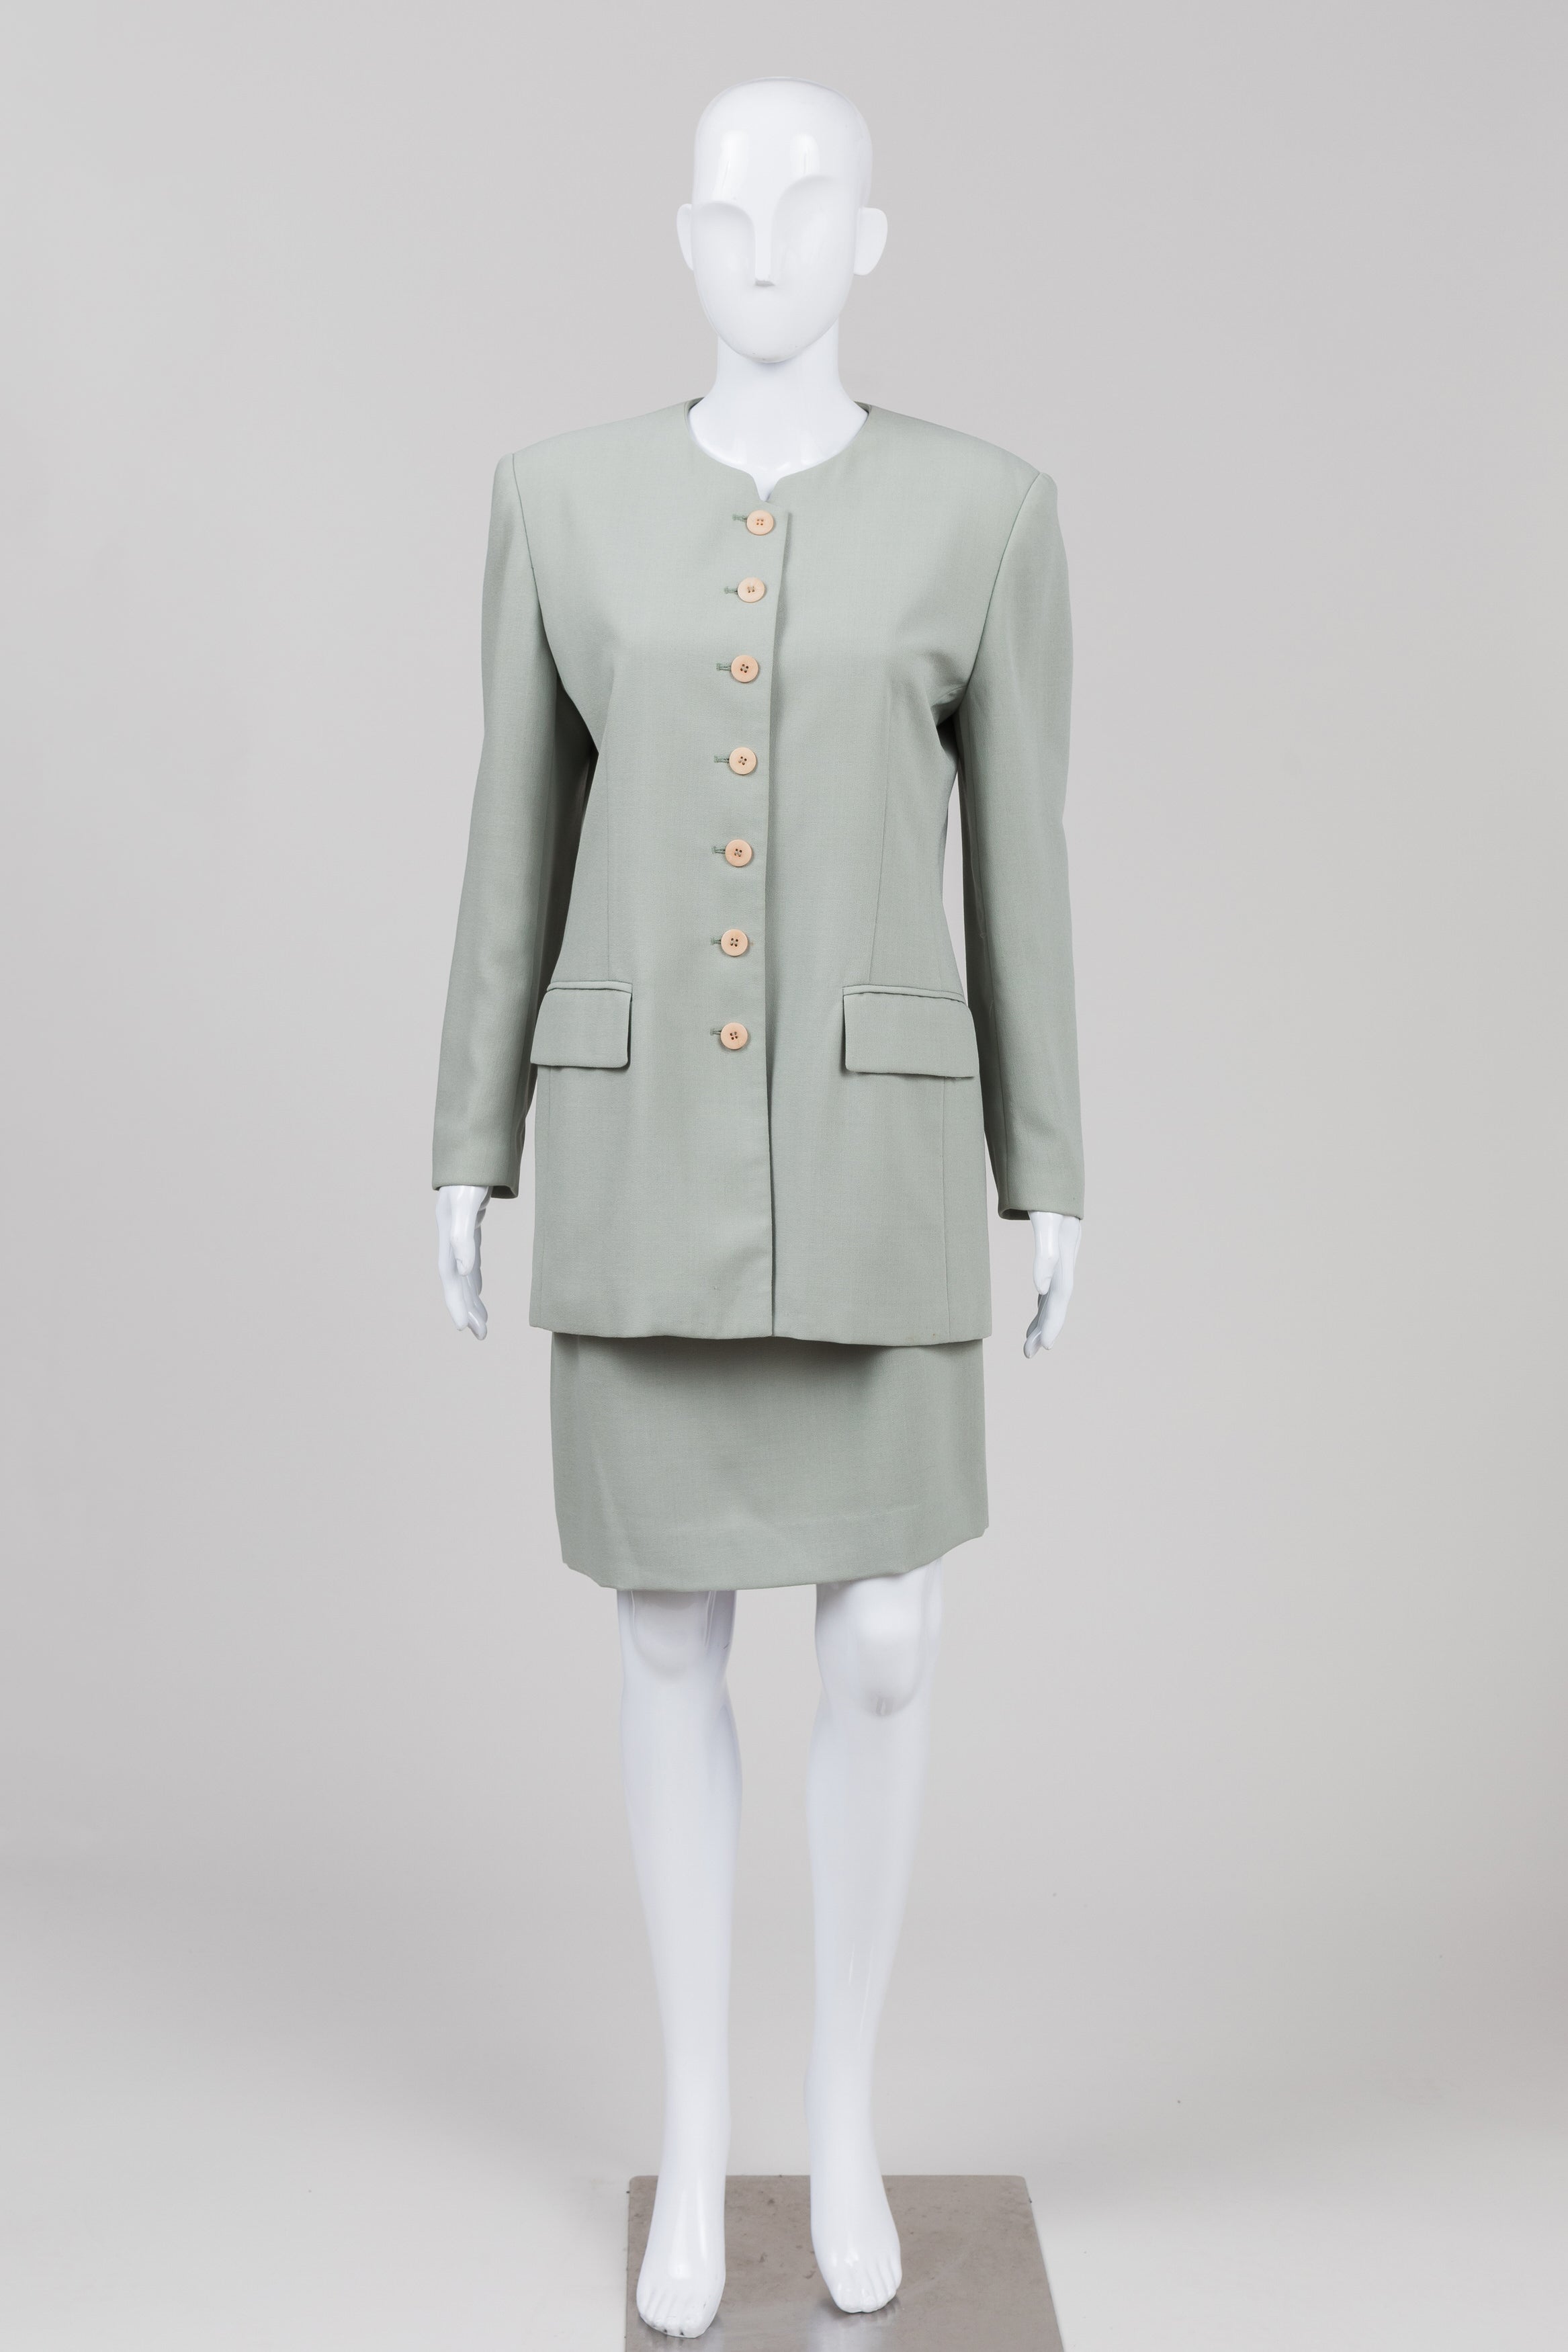 Rena Rowan Vintage Pistachio Skirt Suit (8)